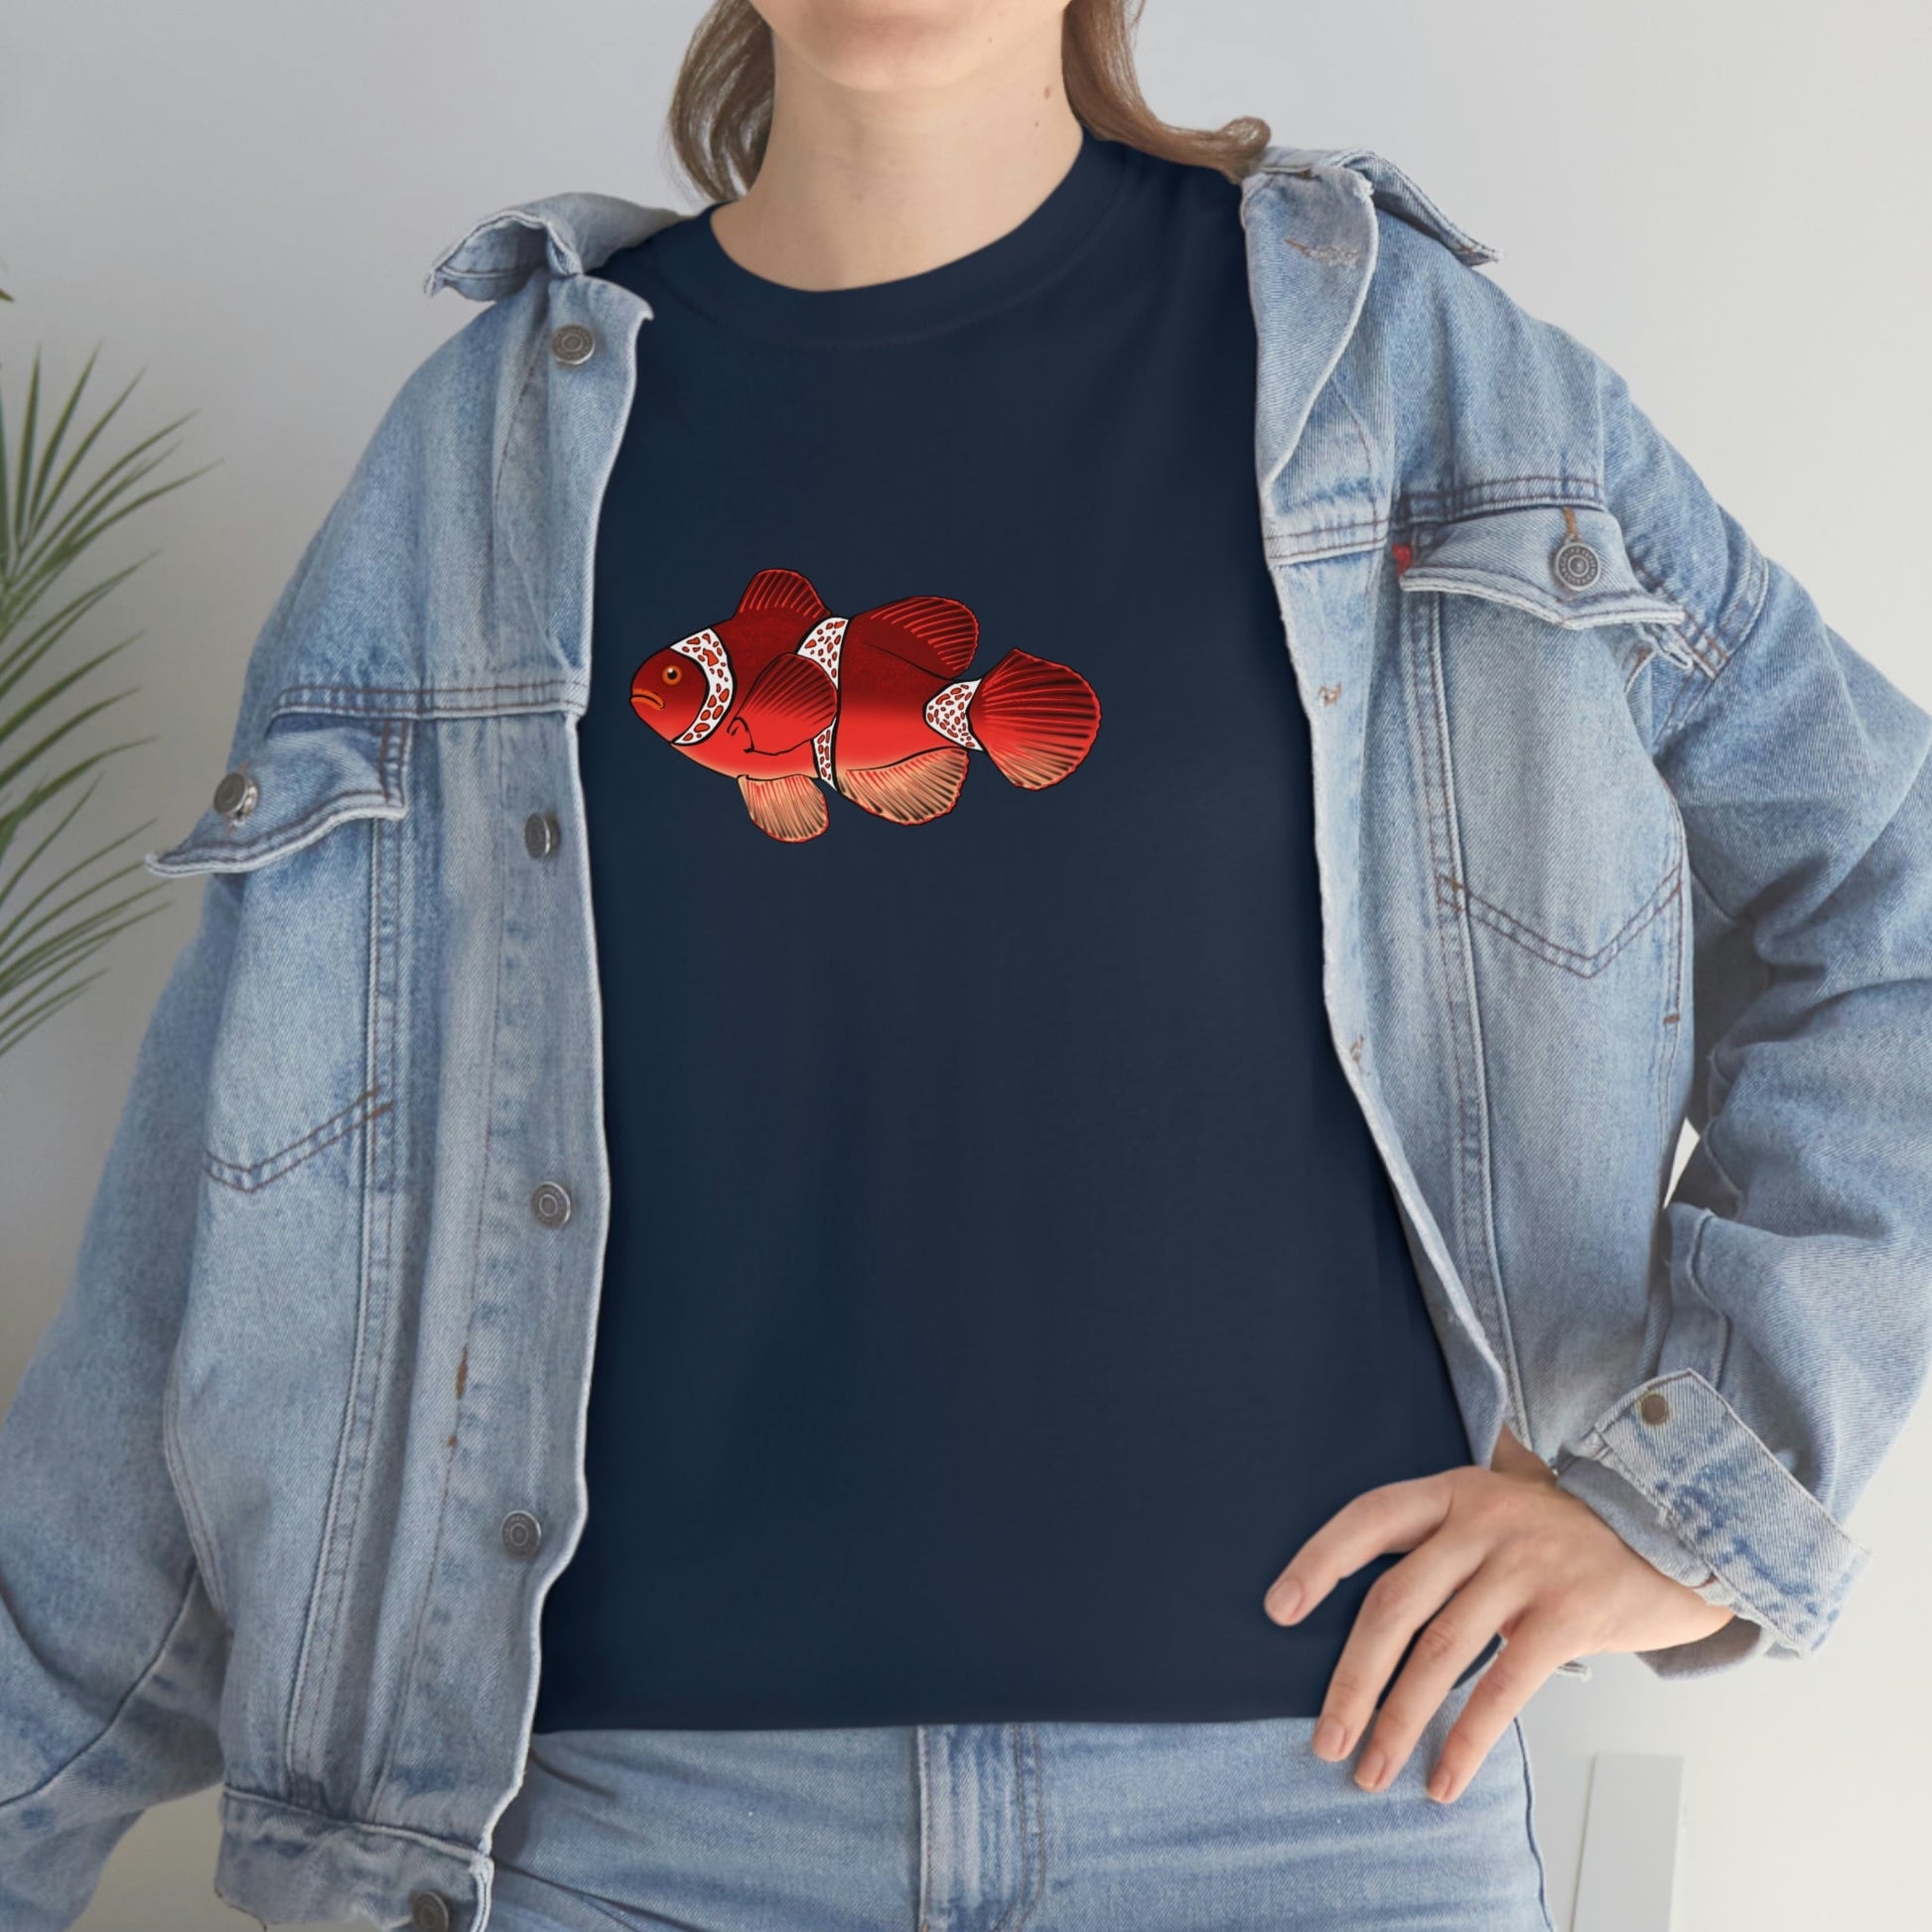 Simple Maroon Clownfish Shirt - Reef of Clowns